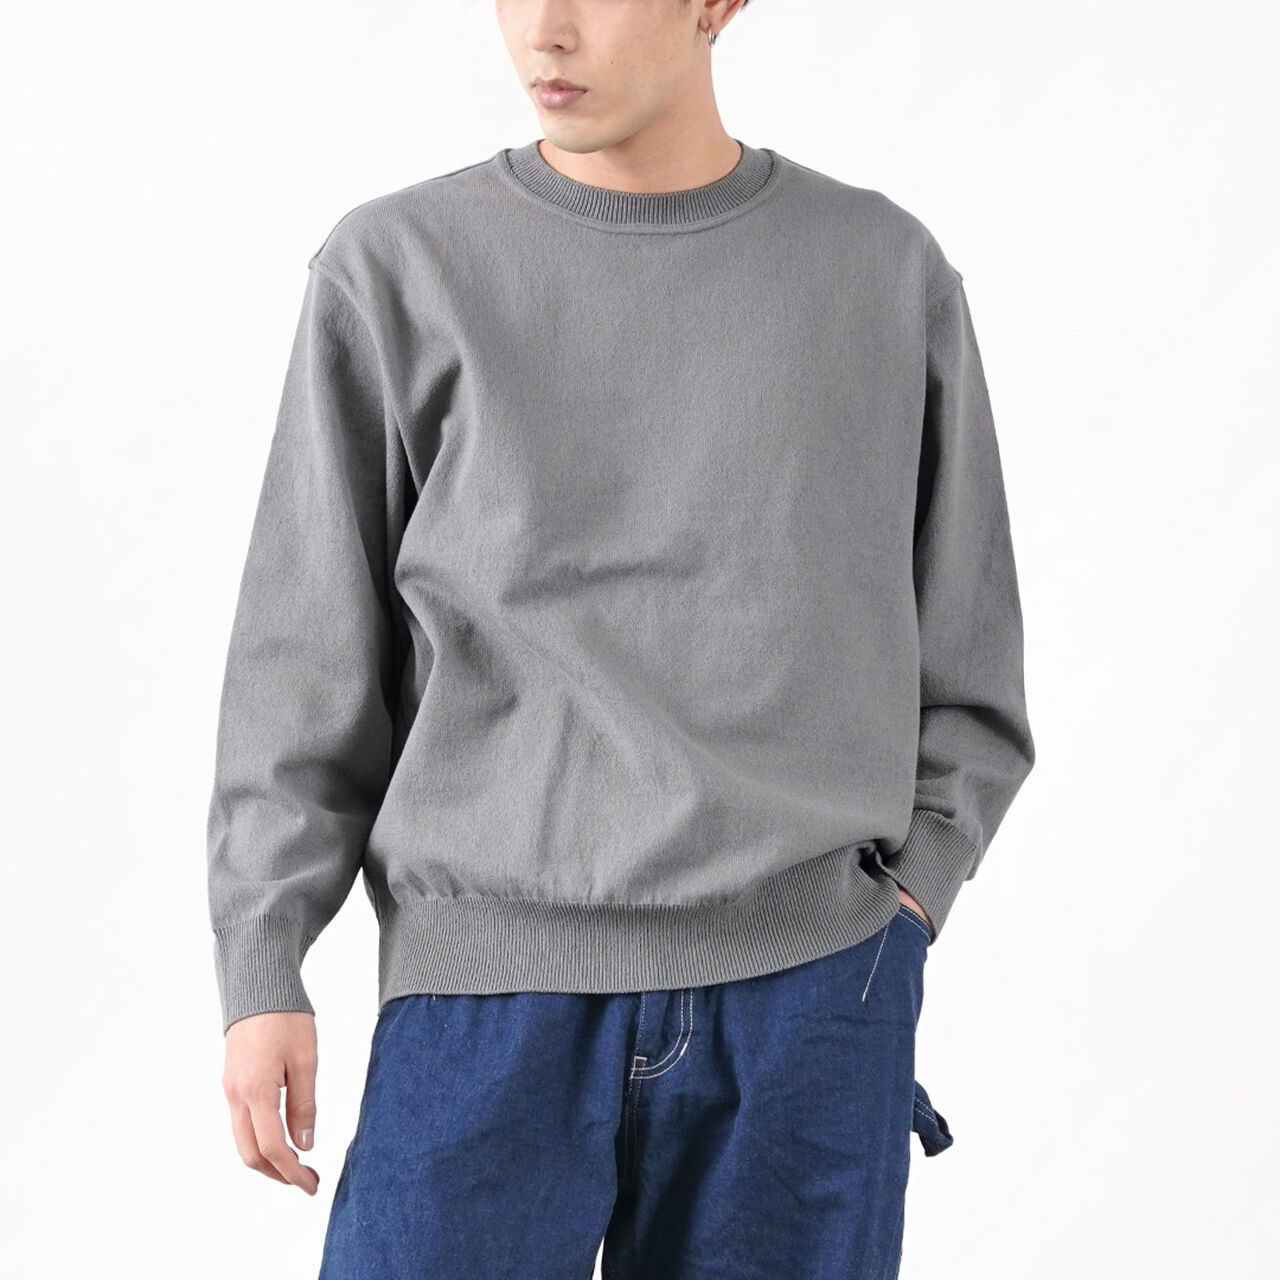 Color Special Order Wave Cotton Knit Pullover,Grey, large image number 0